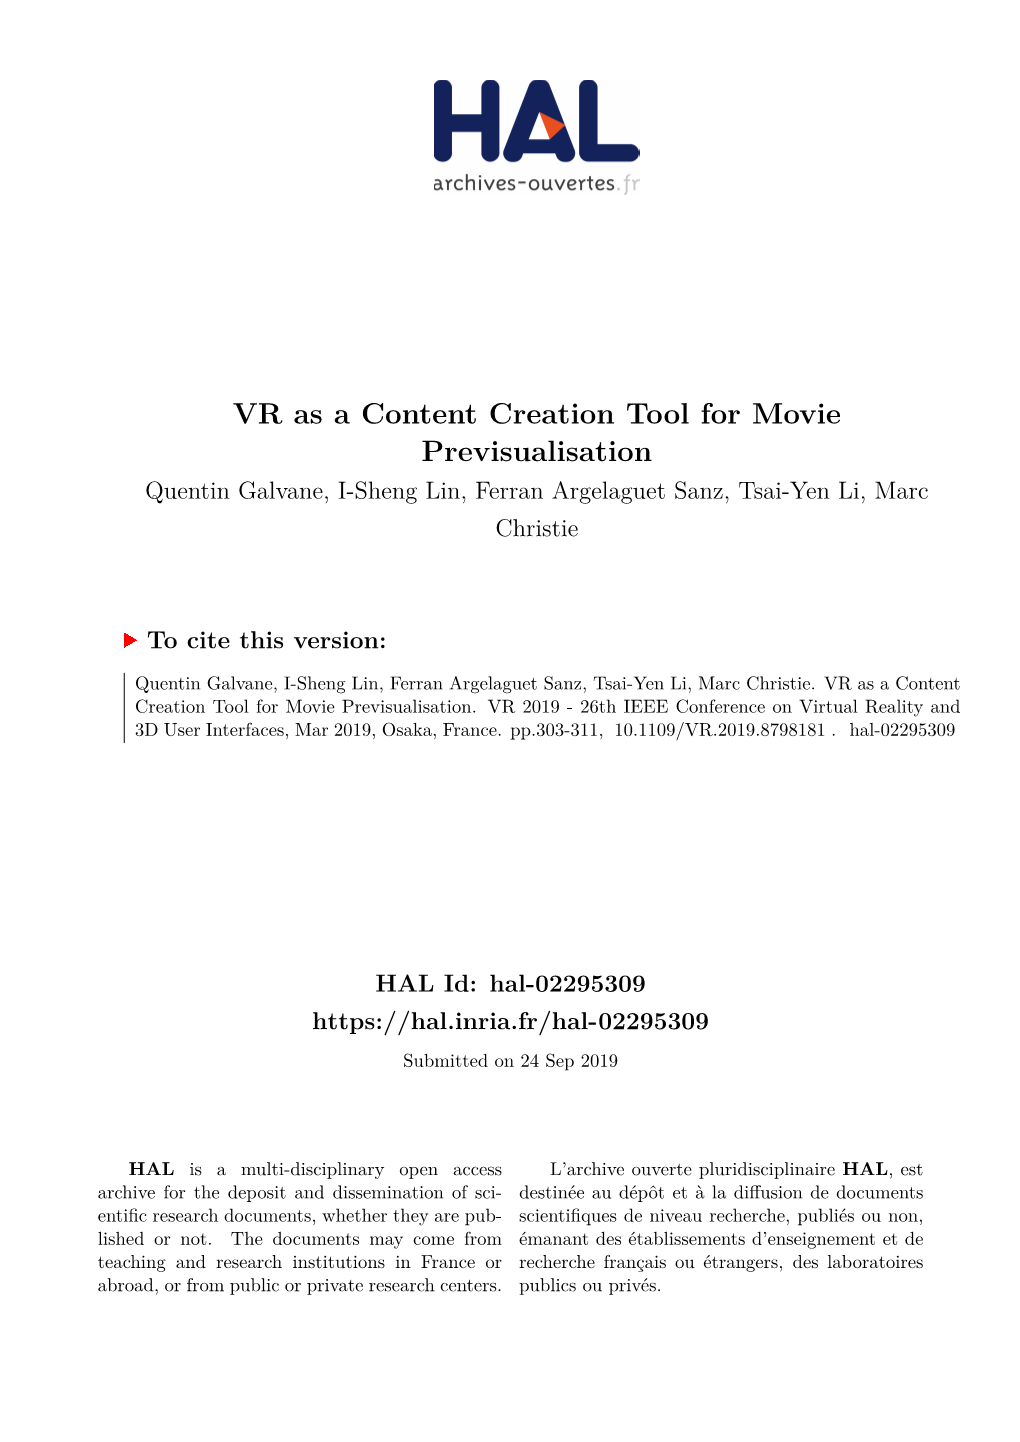 VR As a Content Creation Tool for Movie Previsualisation Quentin Galvane, I-Sheng Lin, Ferran Argelaguet Sanz, Tsai-Yen Li, Marc Christie